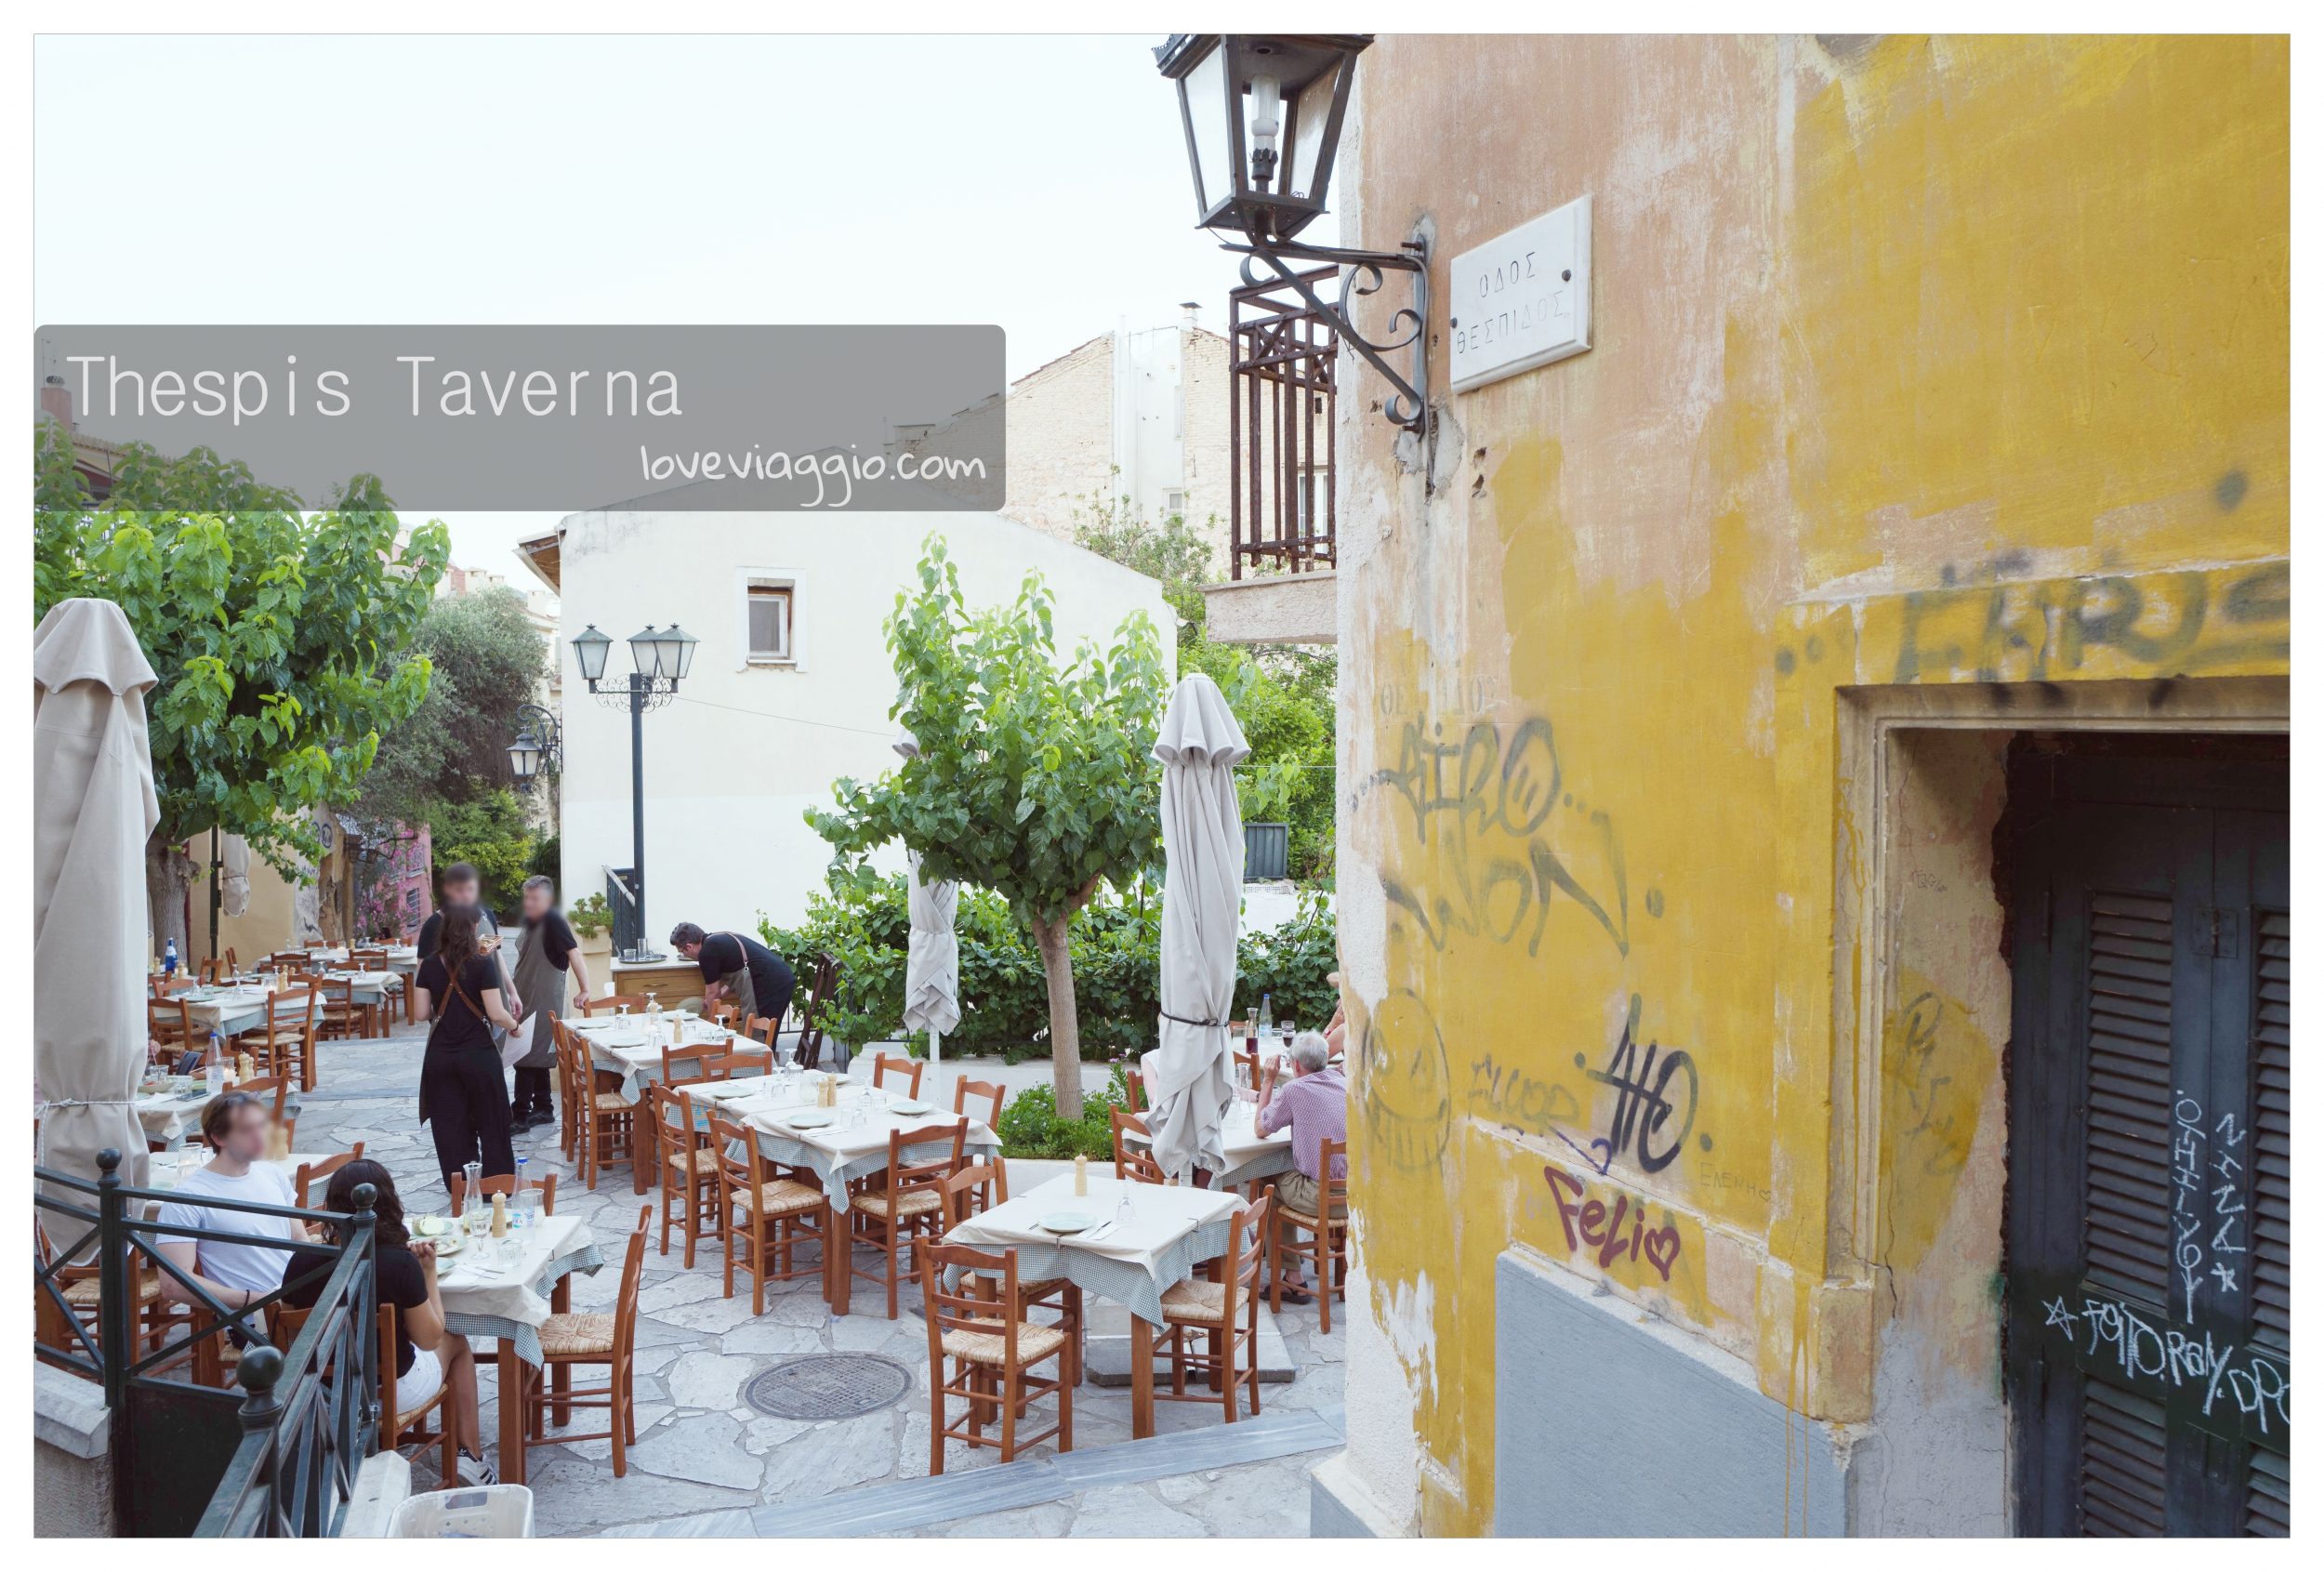 Thespis Taverna,地中海料理,希臘,希臘料理,普拉卡,普拉卡餐廳,雅典,雅典餐廳 @薇樂莉 - 旅行.生活.攝影